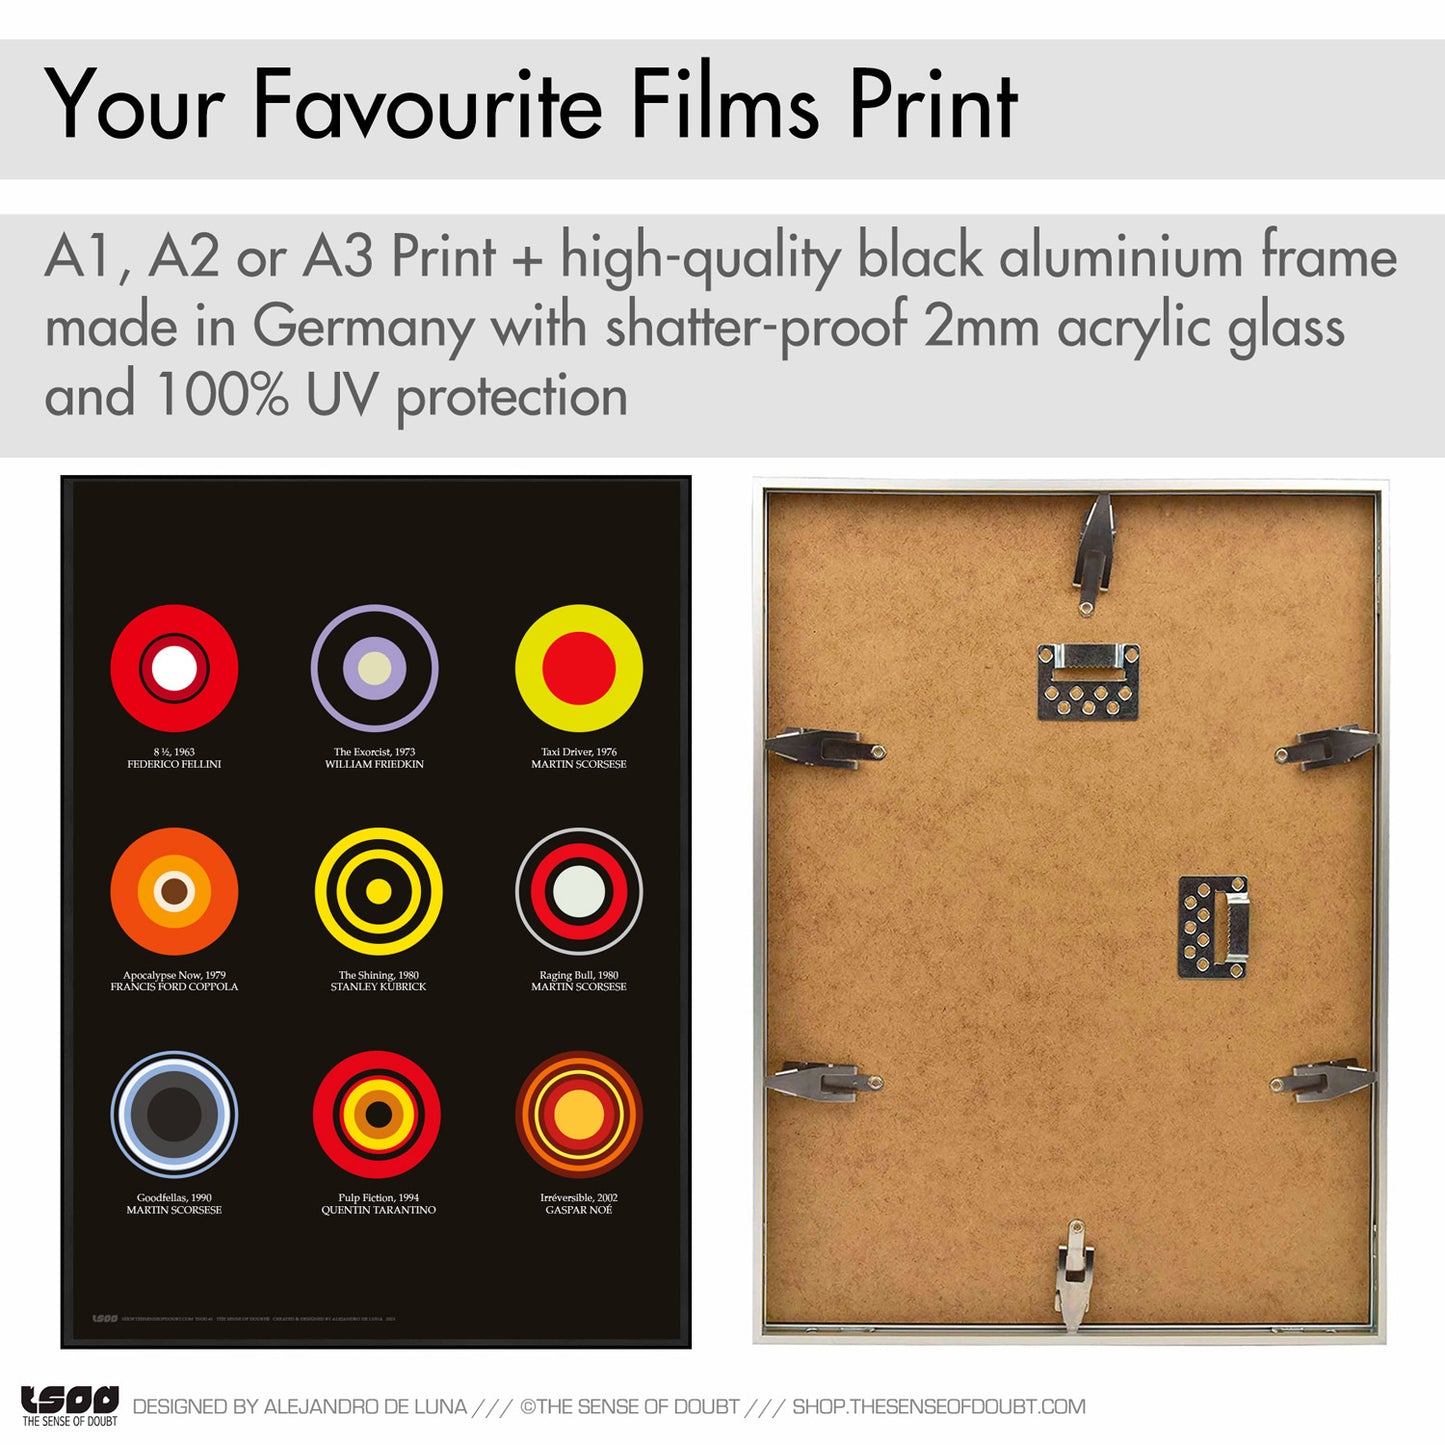 Your Favourite Films: Custom Film Print